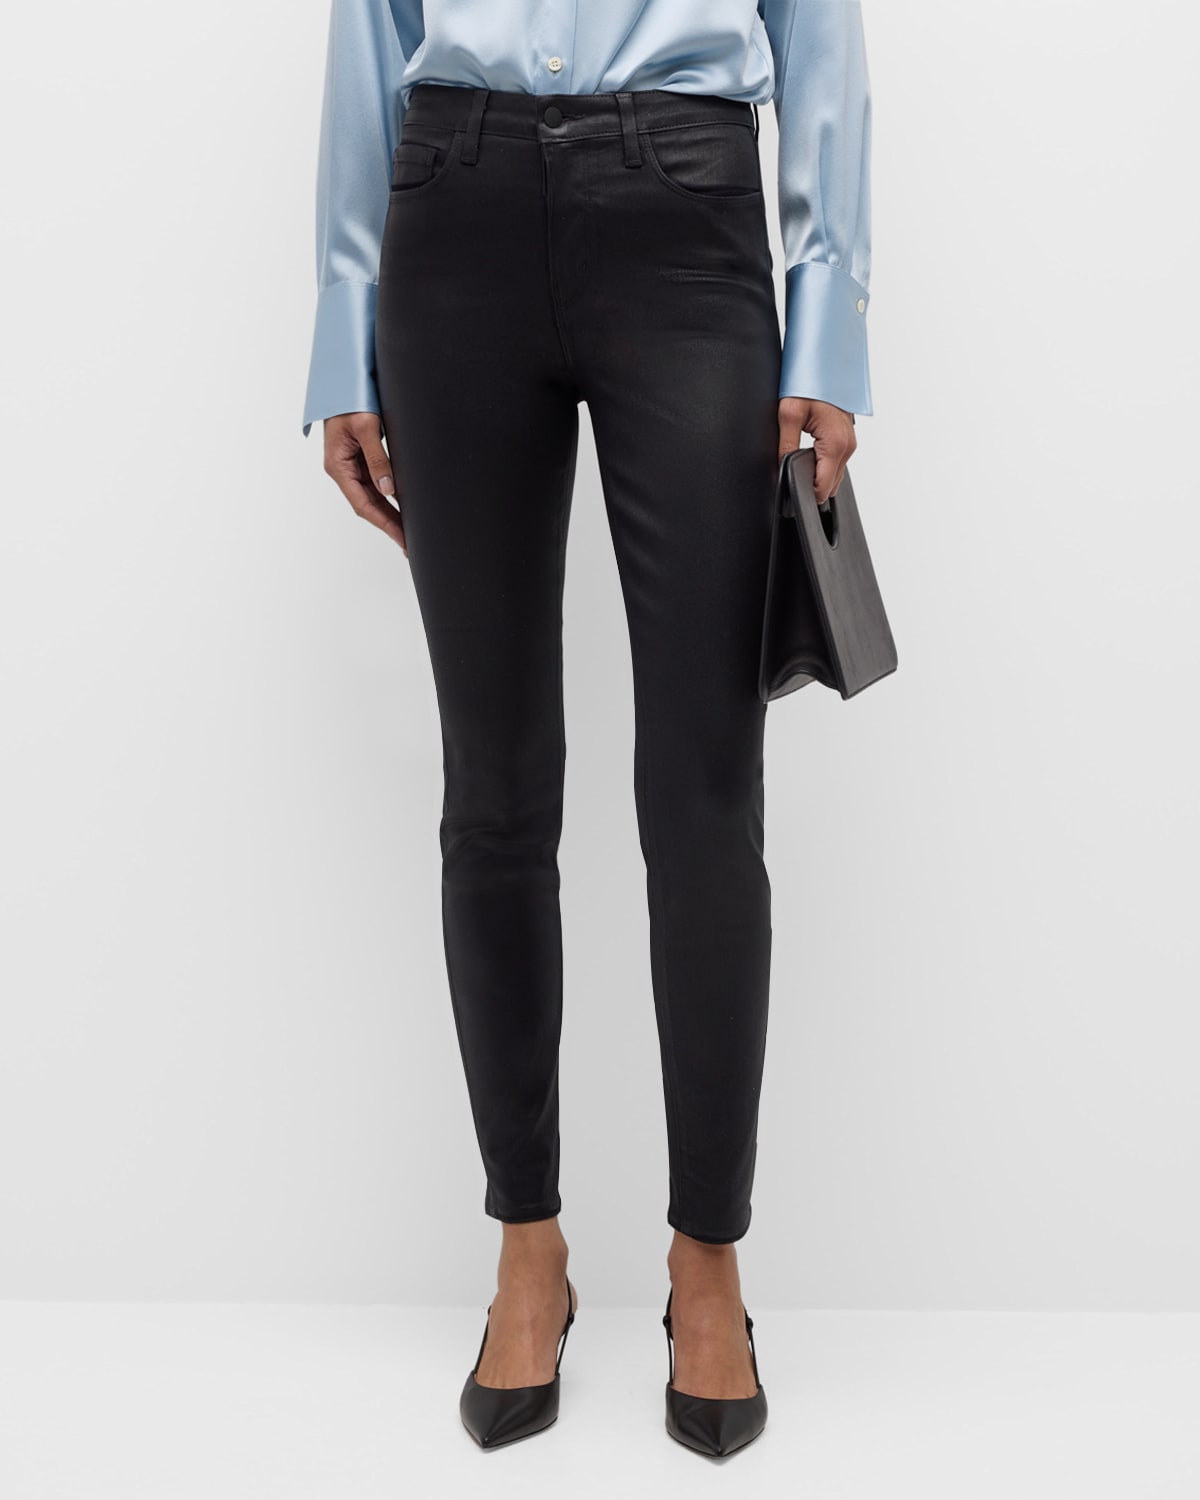 L'Agence Marguerite Coated Modal Denim High-Rise Skinny Jeans